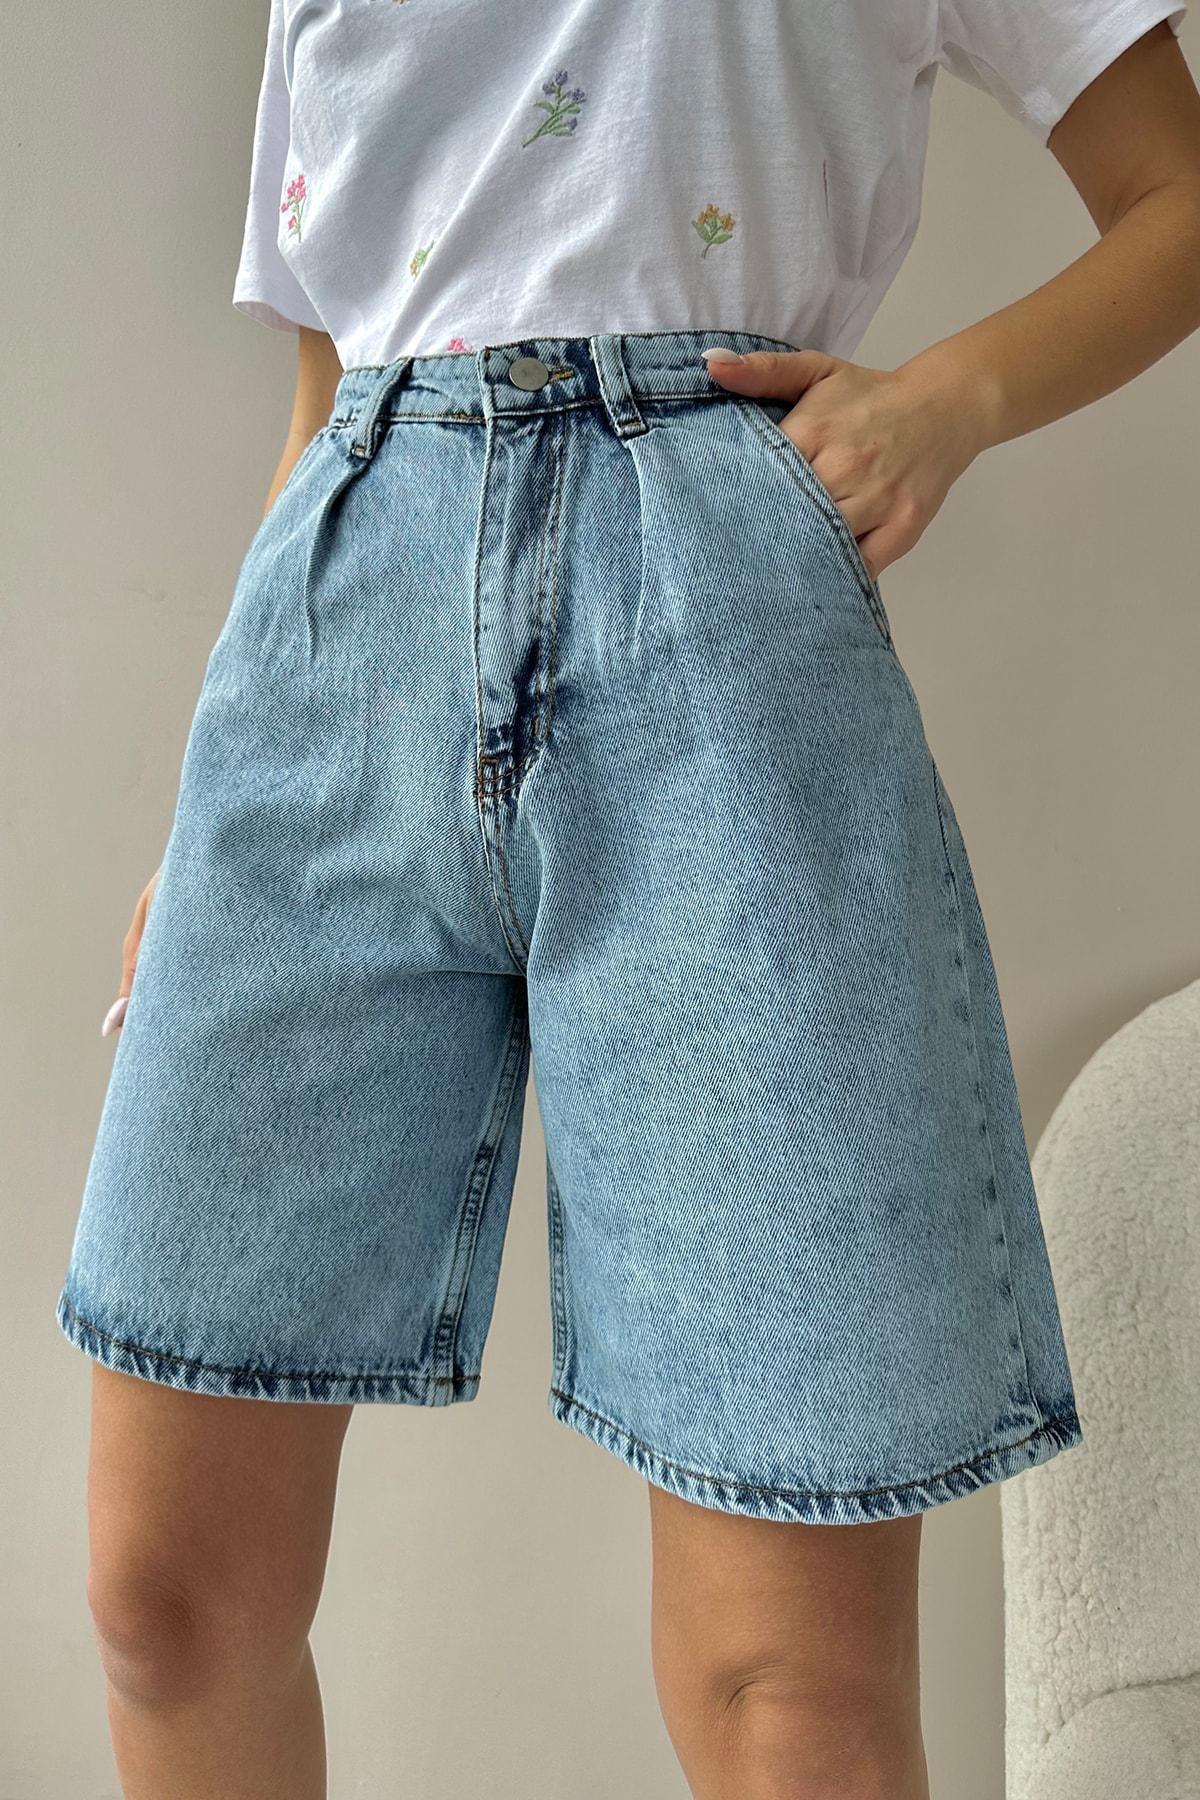 Alacati - Blue High Waist Shorts